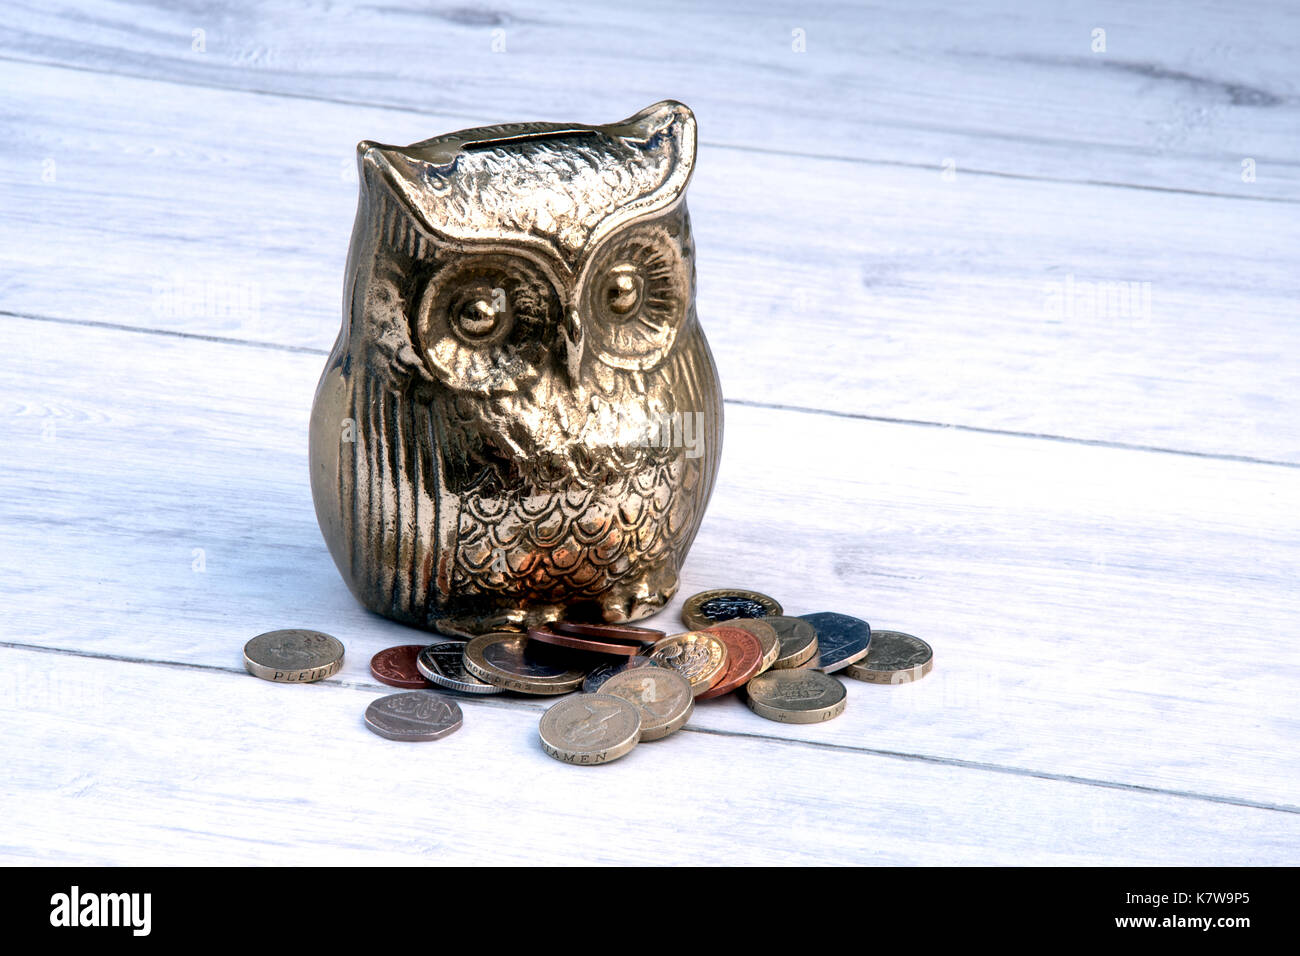 Coin Bank Metal Owl Money Storage Box Thriftbox Figurine Gift Home Decoration